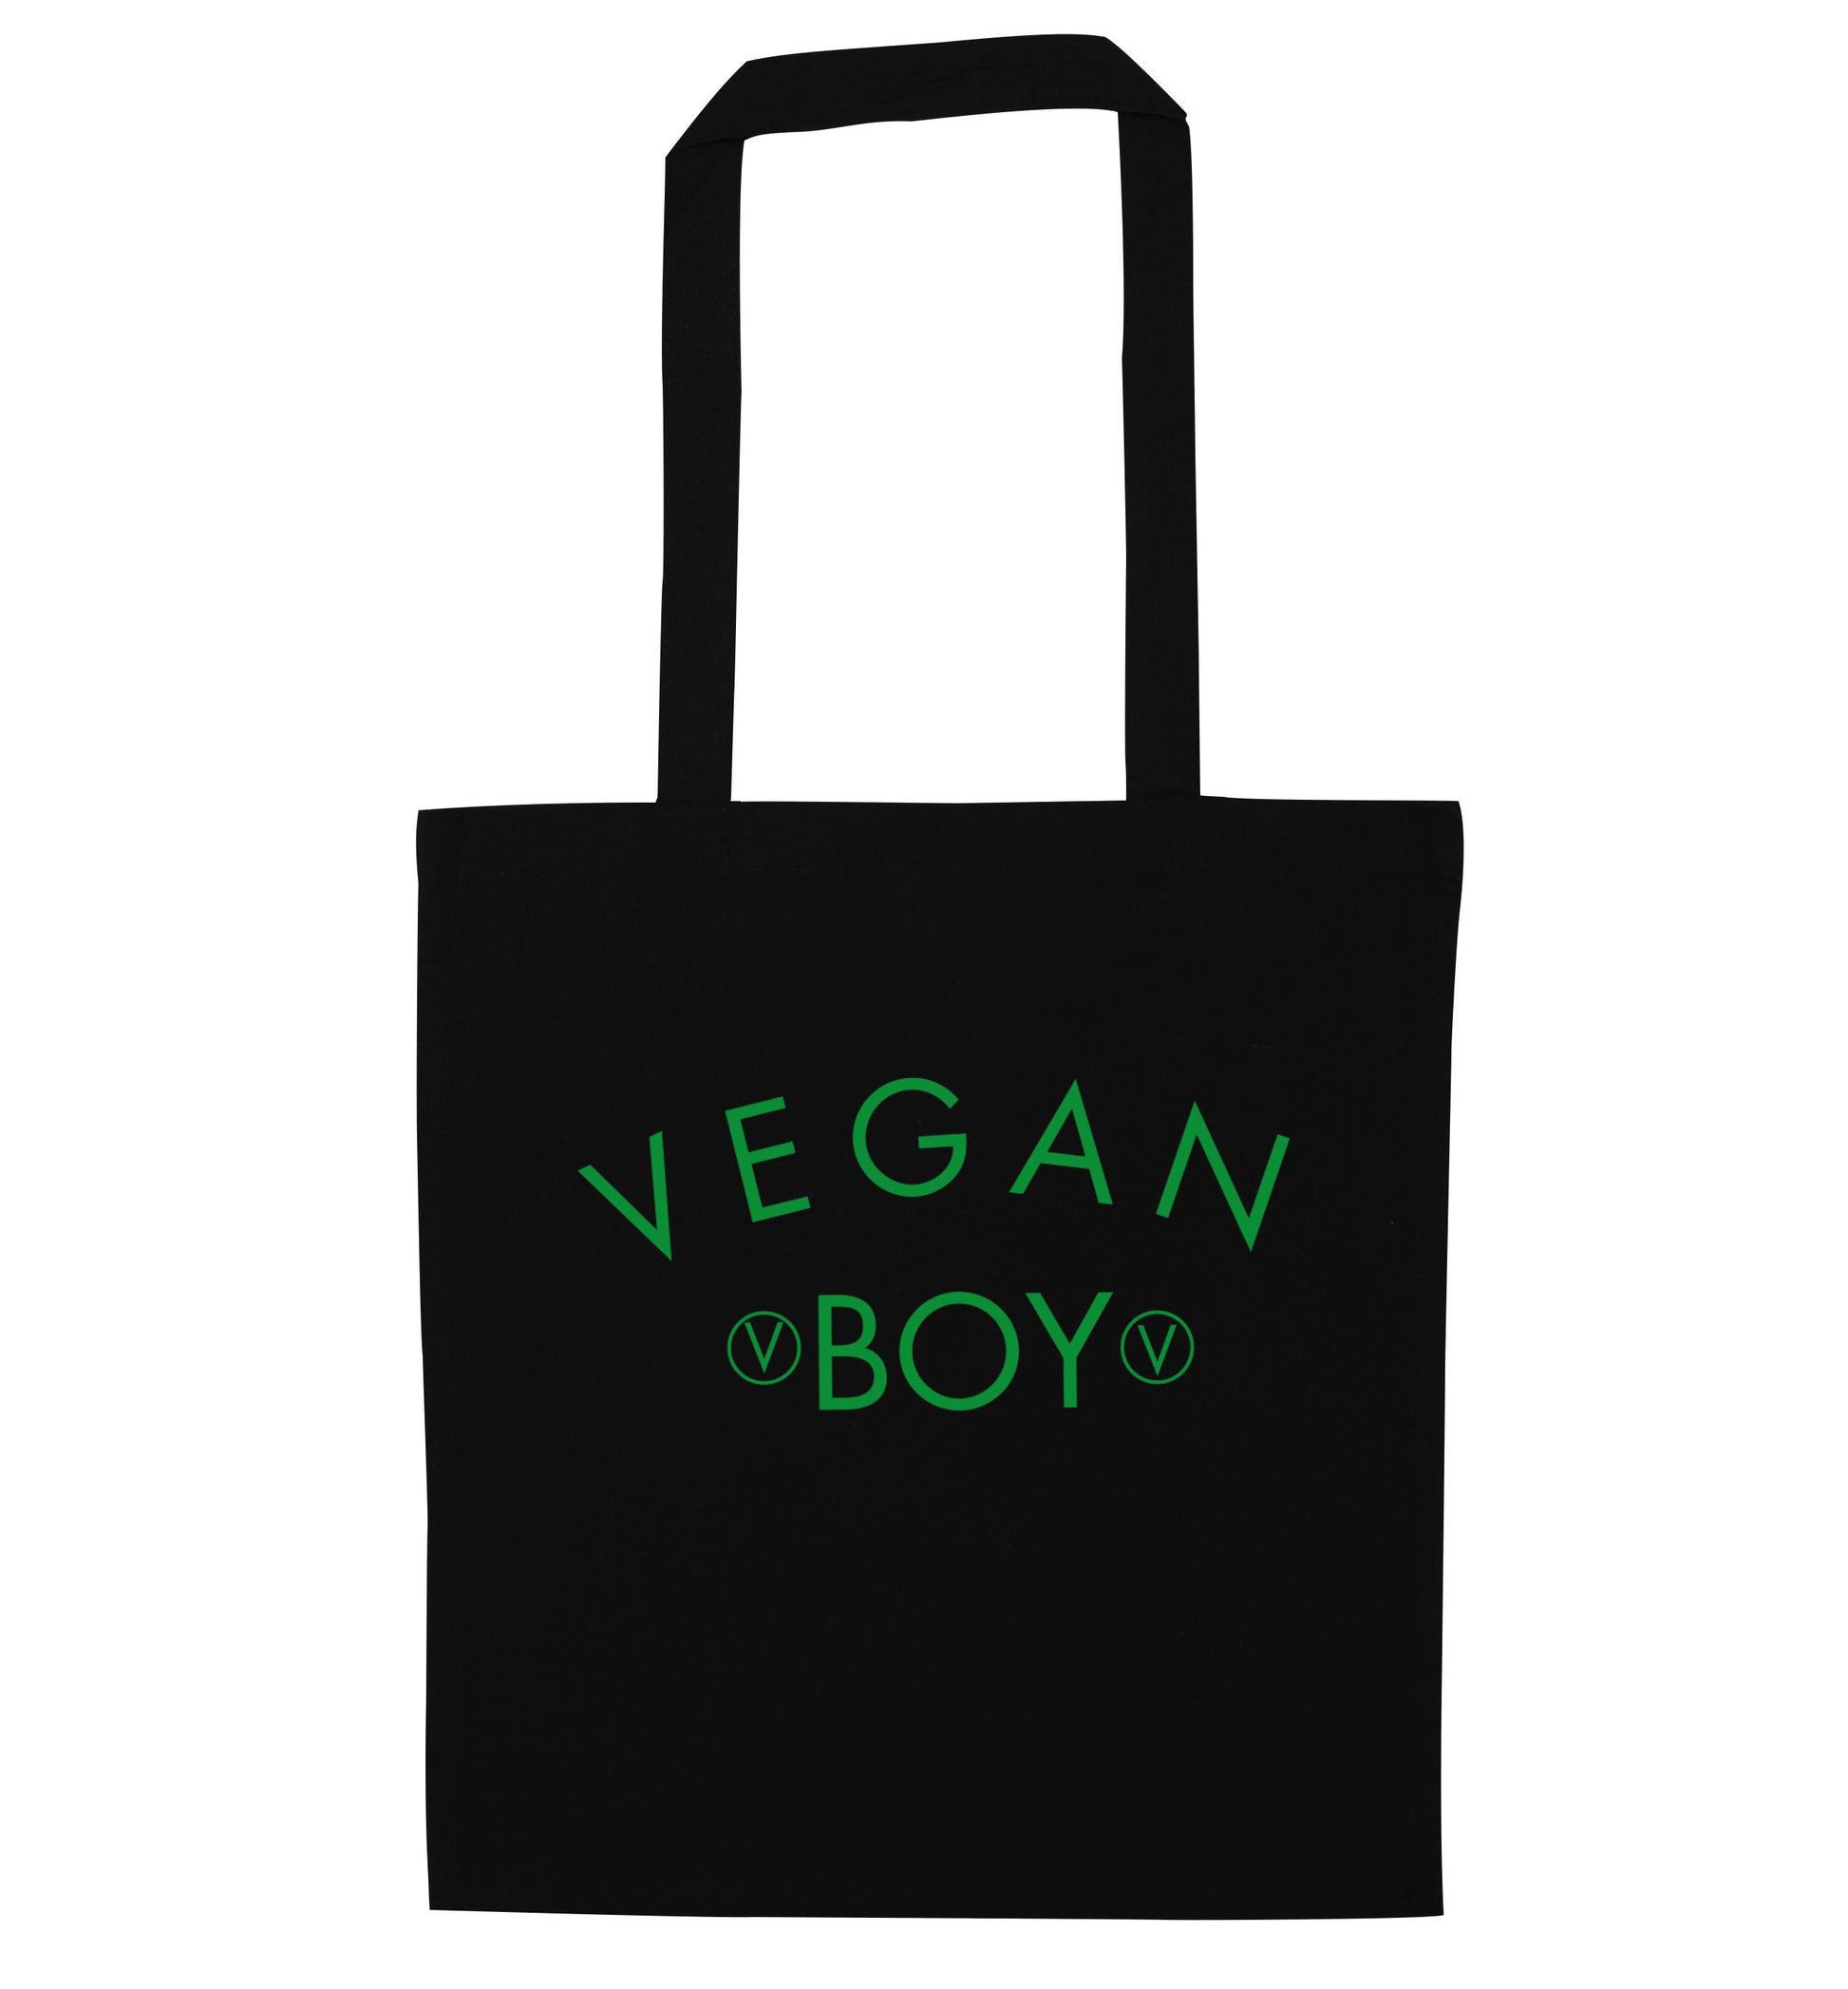 Vegan boy black tote bag